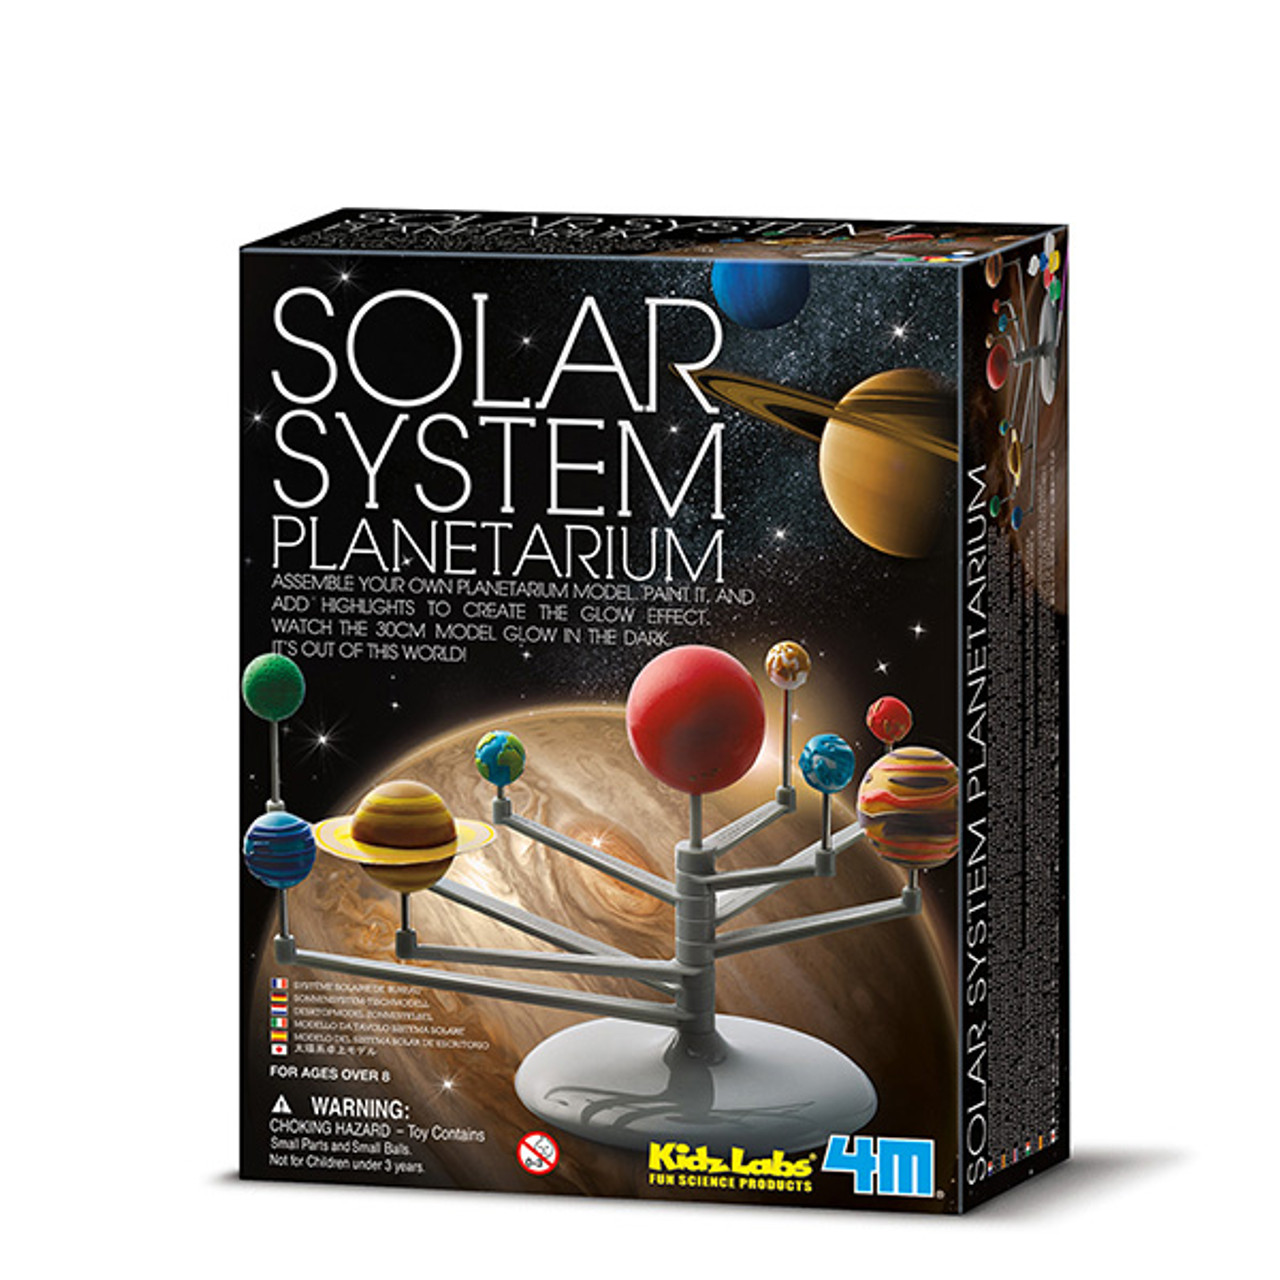 solar system model in a box